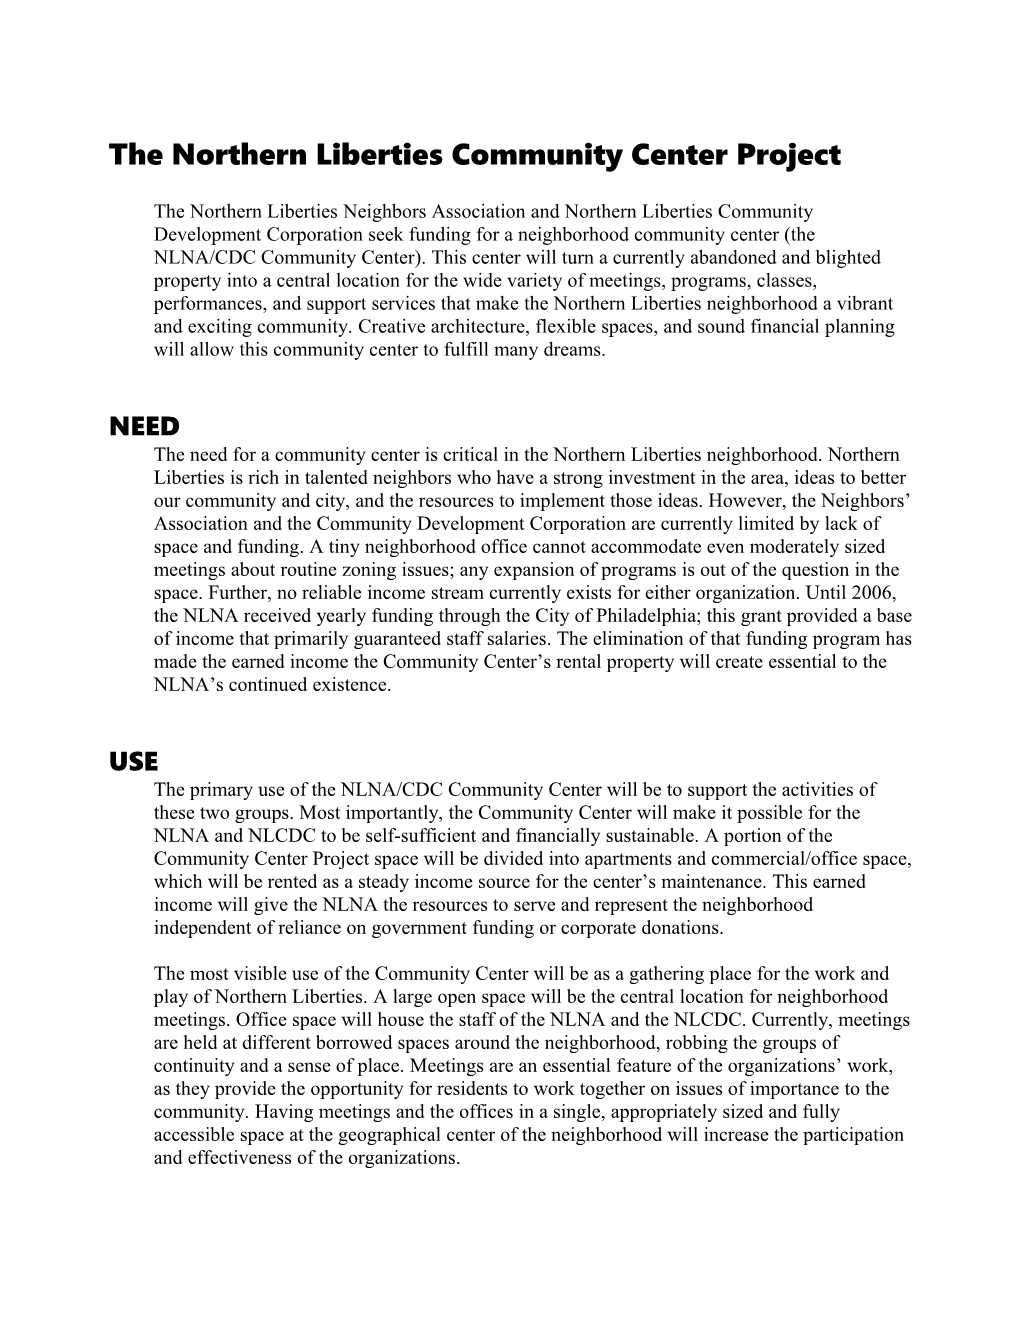 The Northern Liberties Neighbors Association and Northern Liberties Community Development